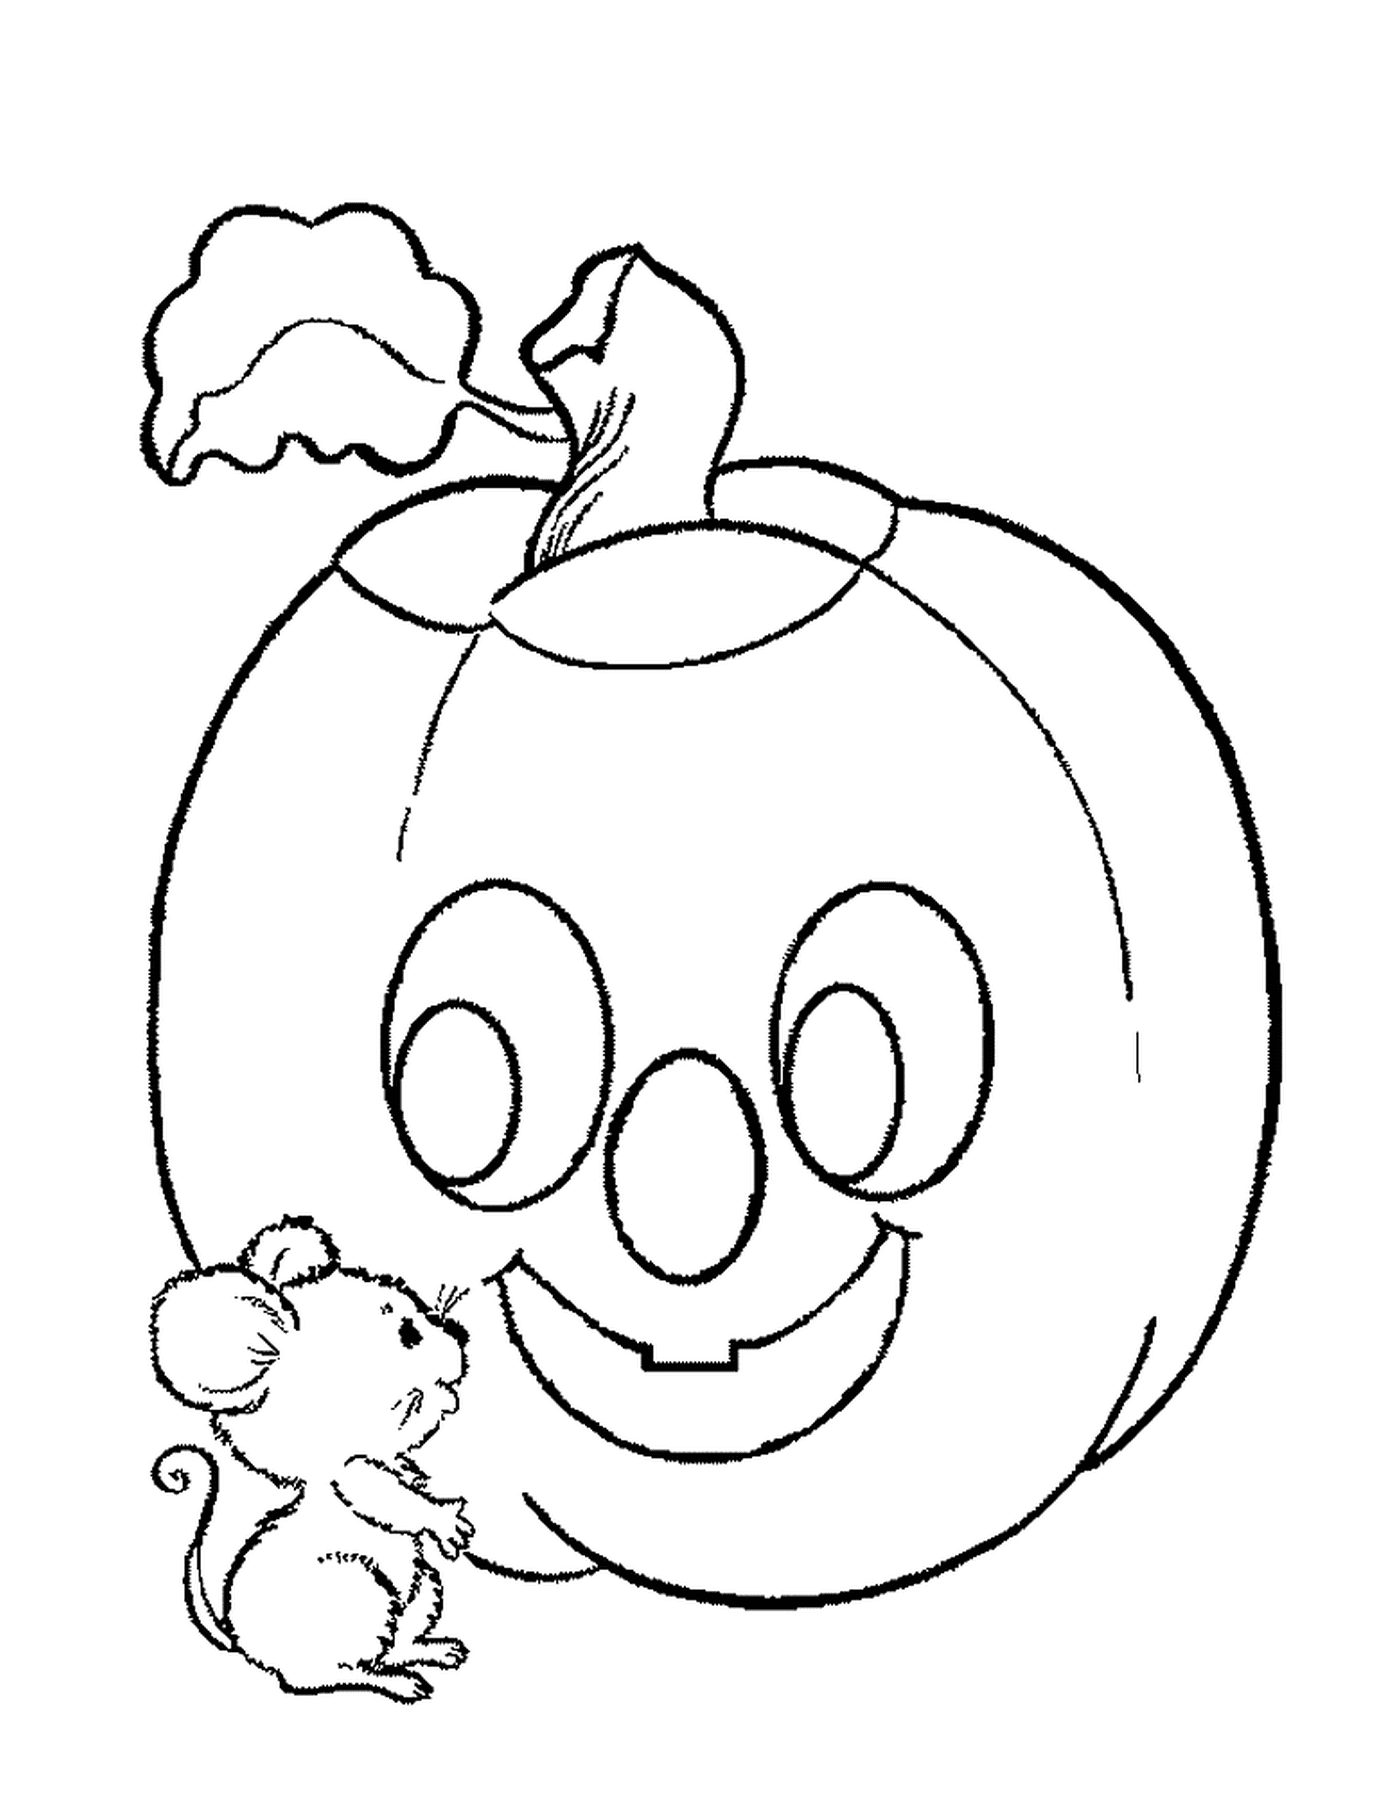  A pumpkin and a little mouse 